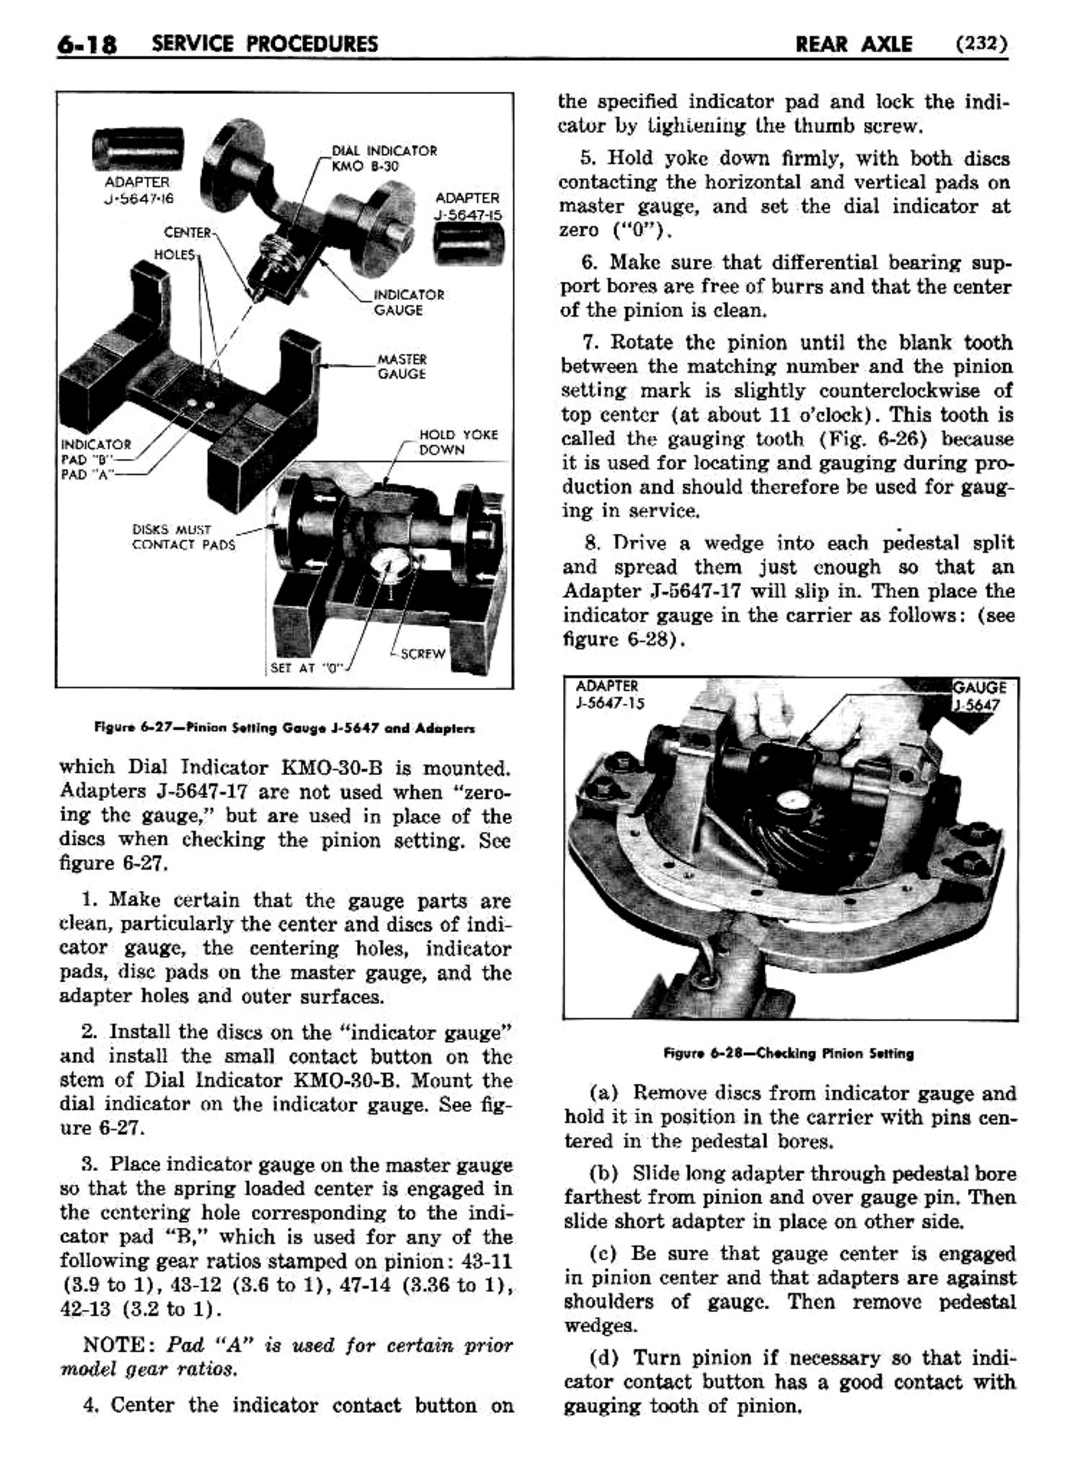 n_07 1956 Buick Shop Manual - Rear Axle-018-018.jpg